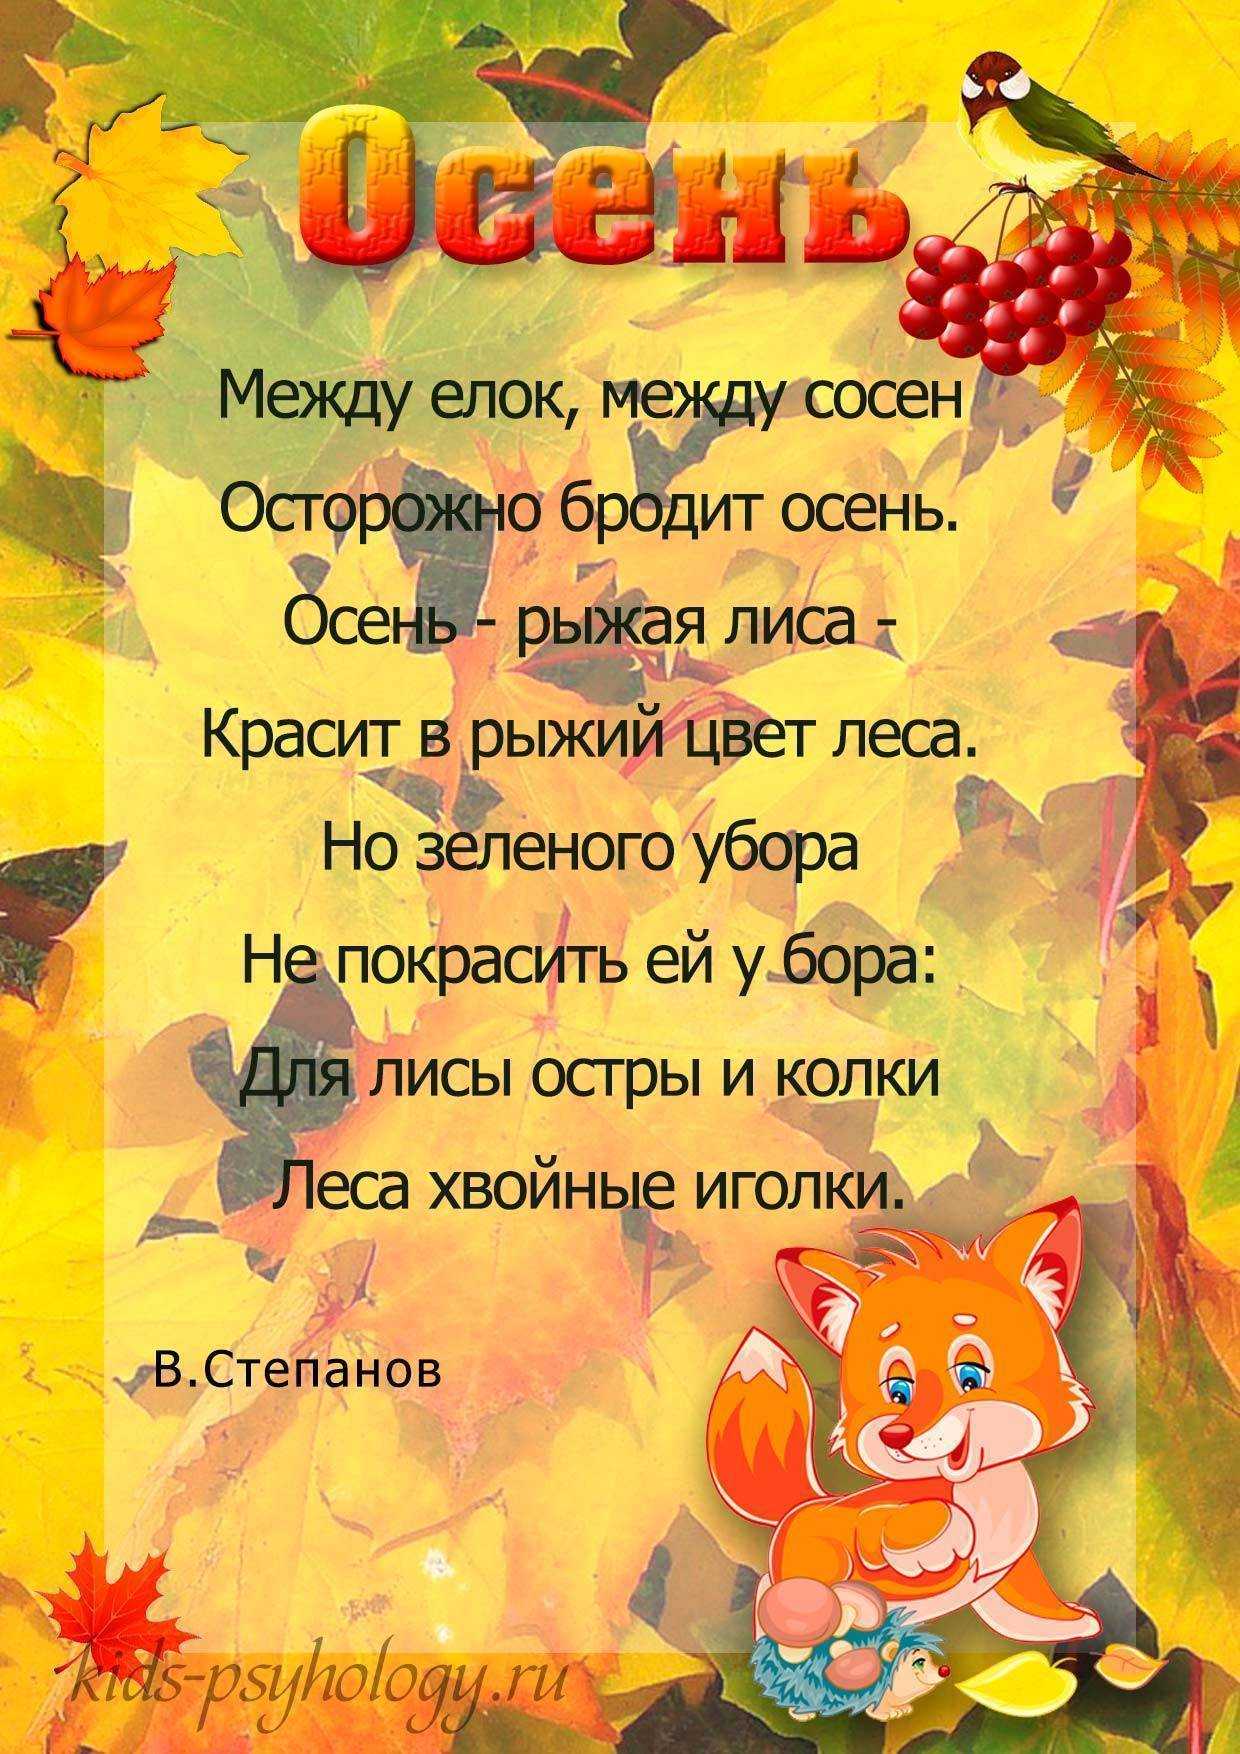 Стихи про зайца | morestihov.ru